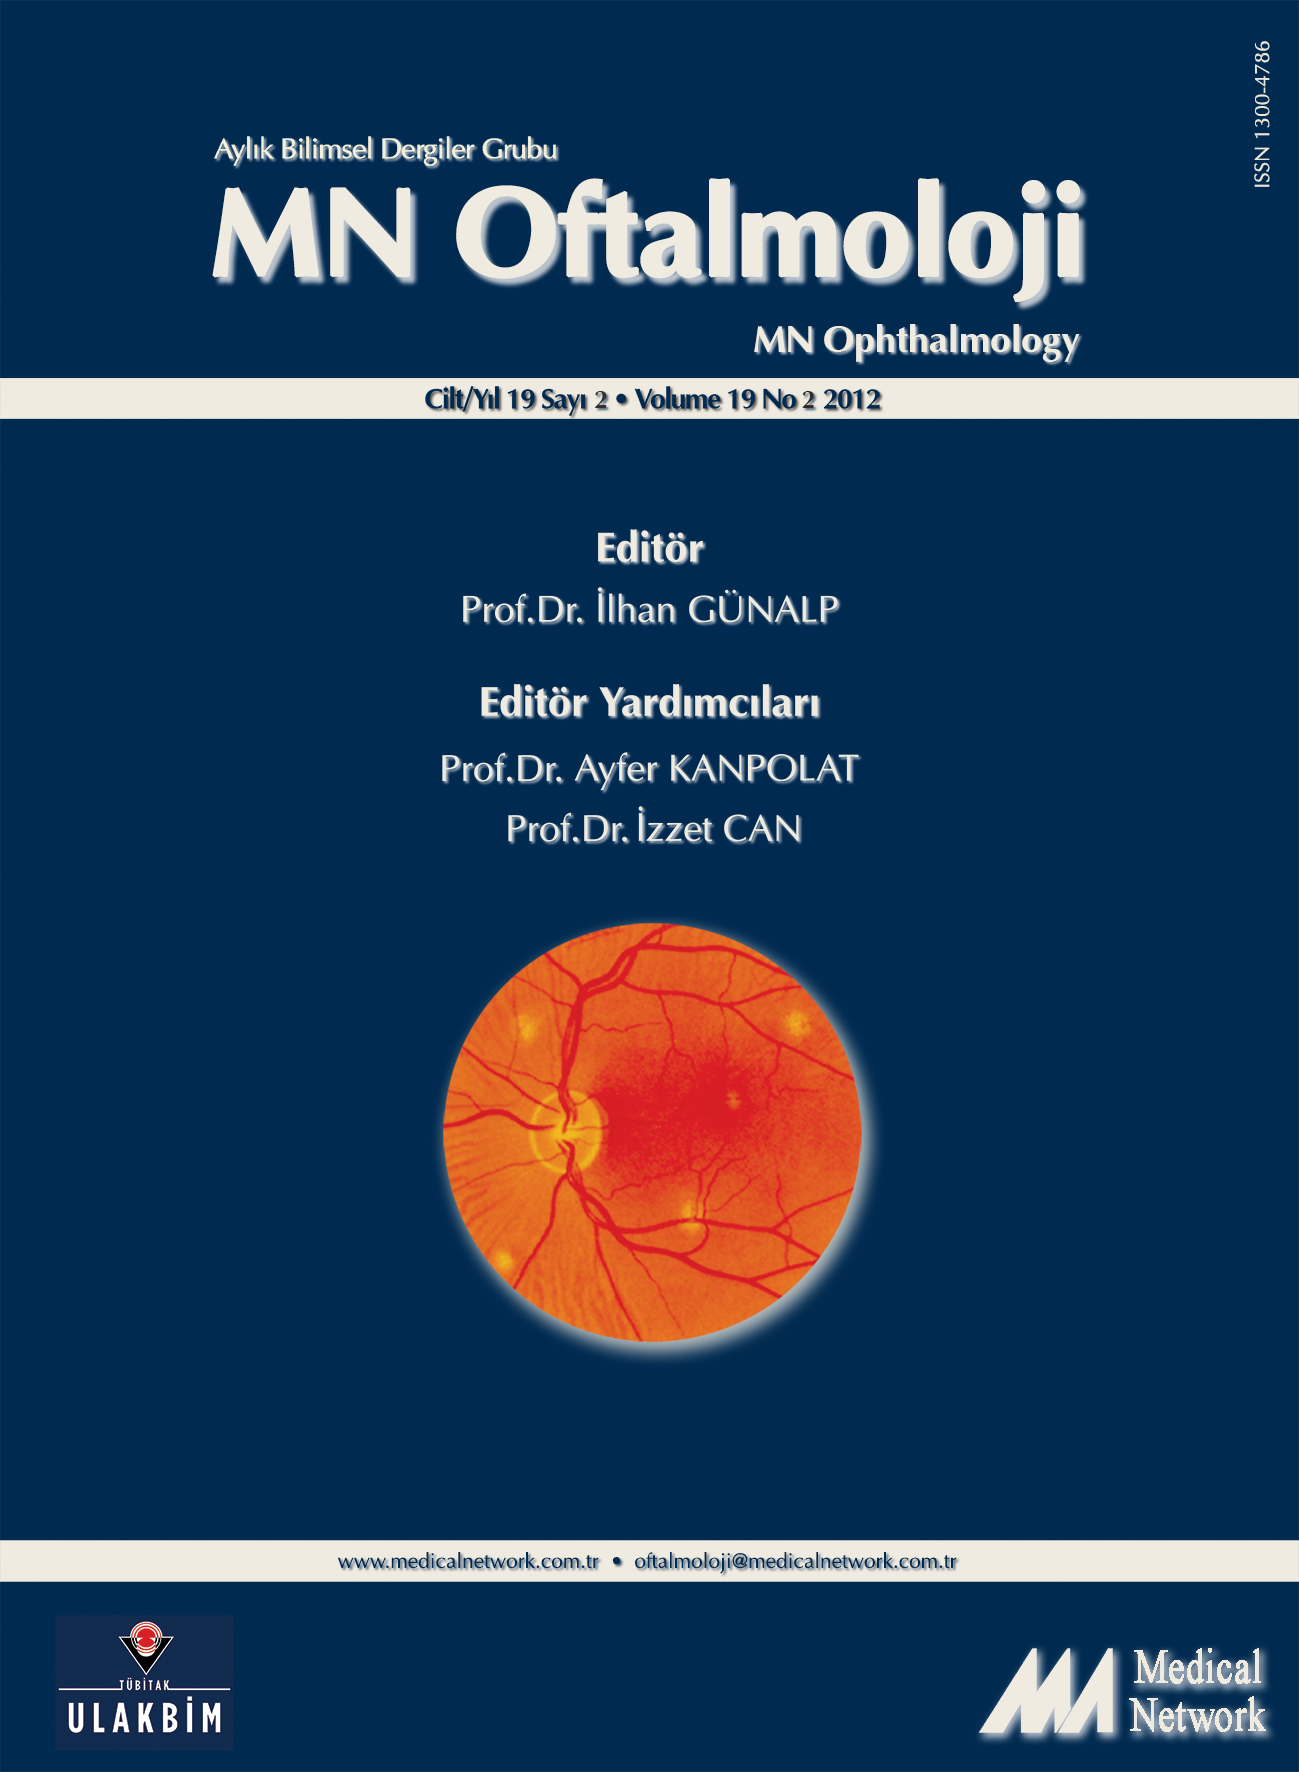 <p>MN Oftalmoloji Cilt: 19 Say: 2 2012 (MN Ophthalmology Volume: 19 No 2 2012)</p>